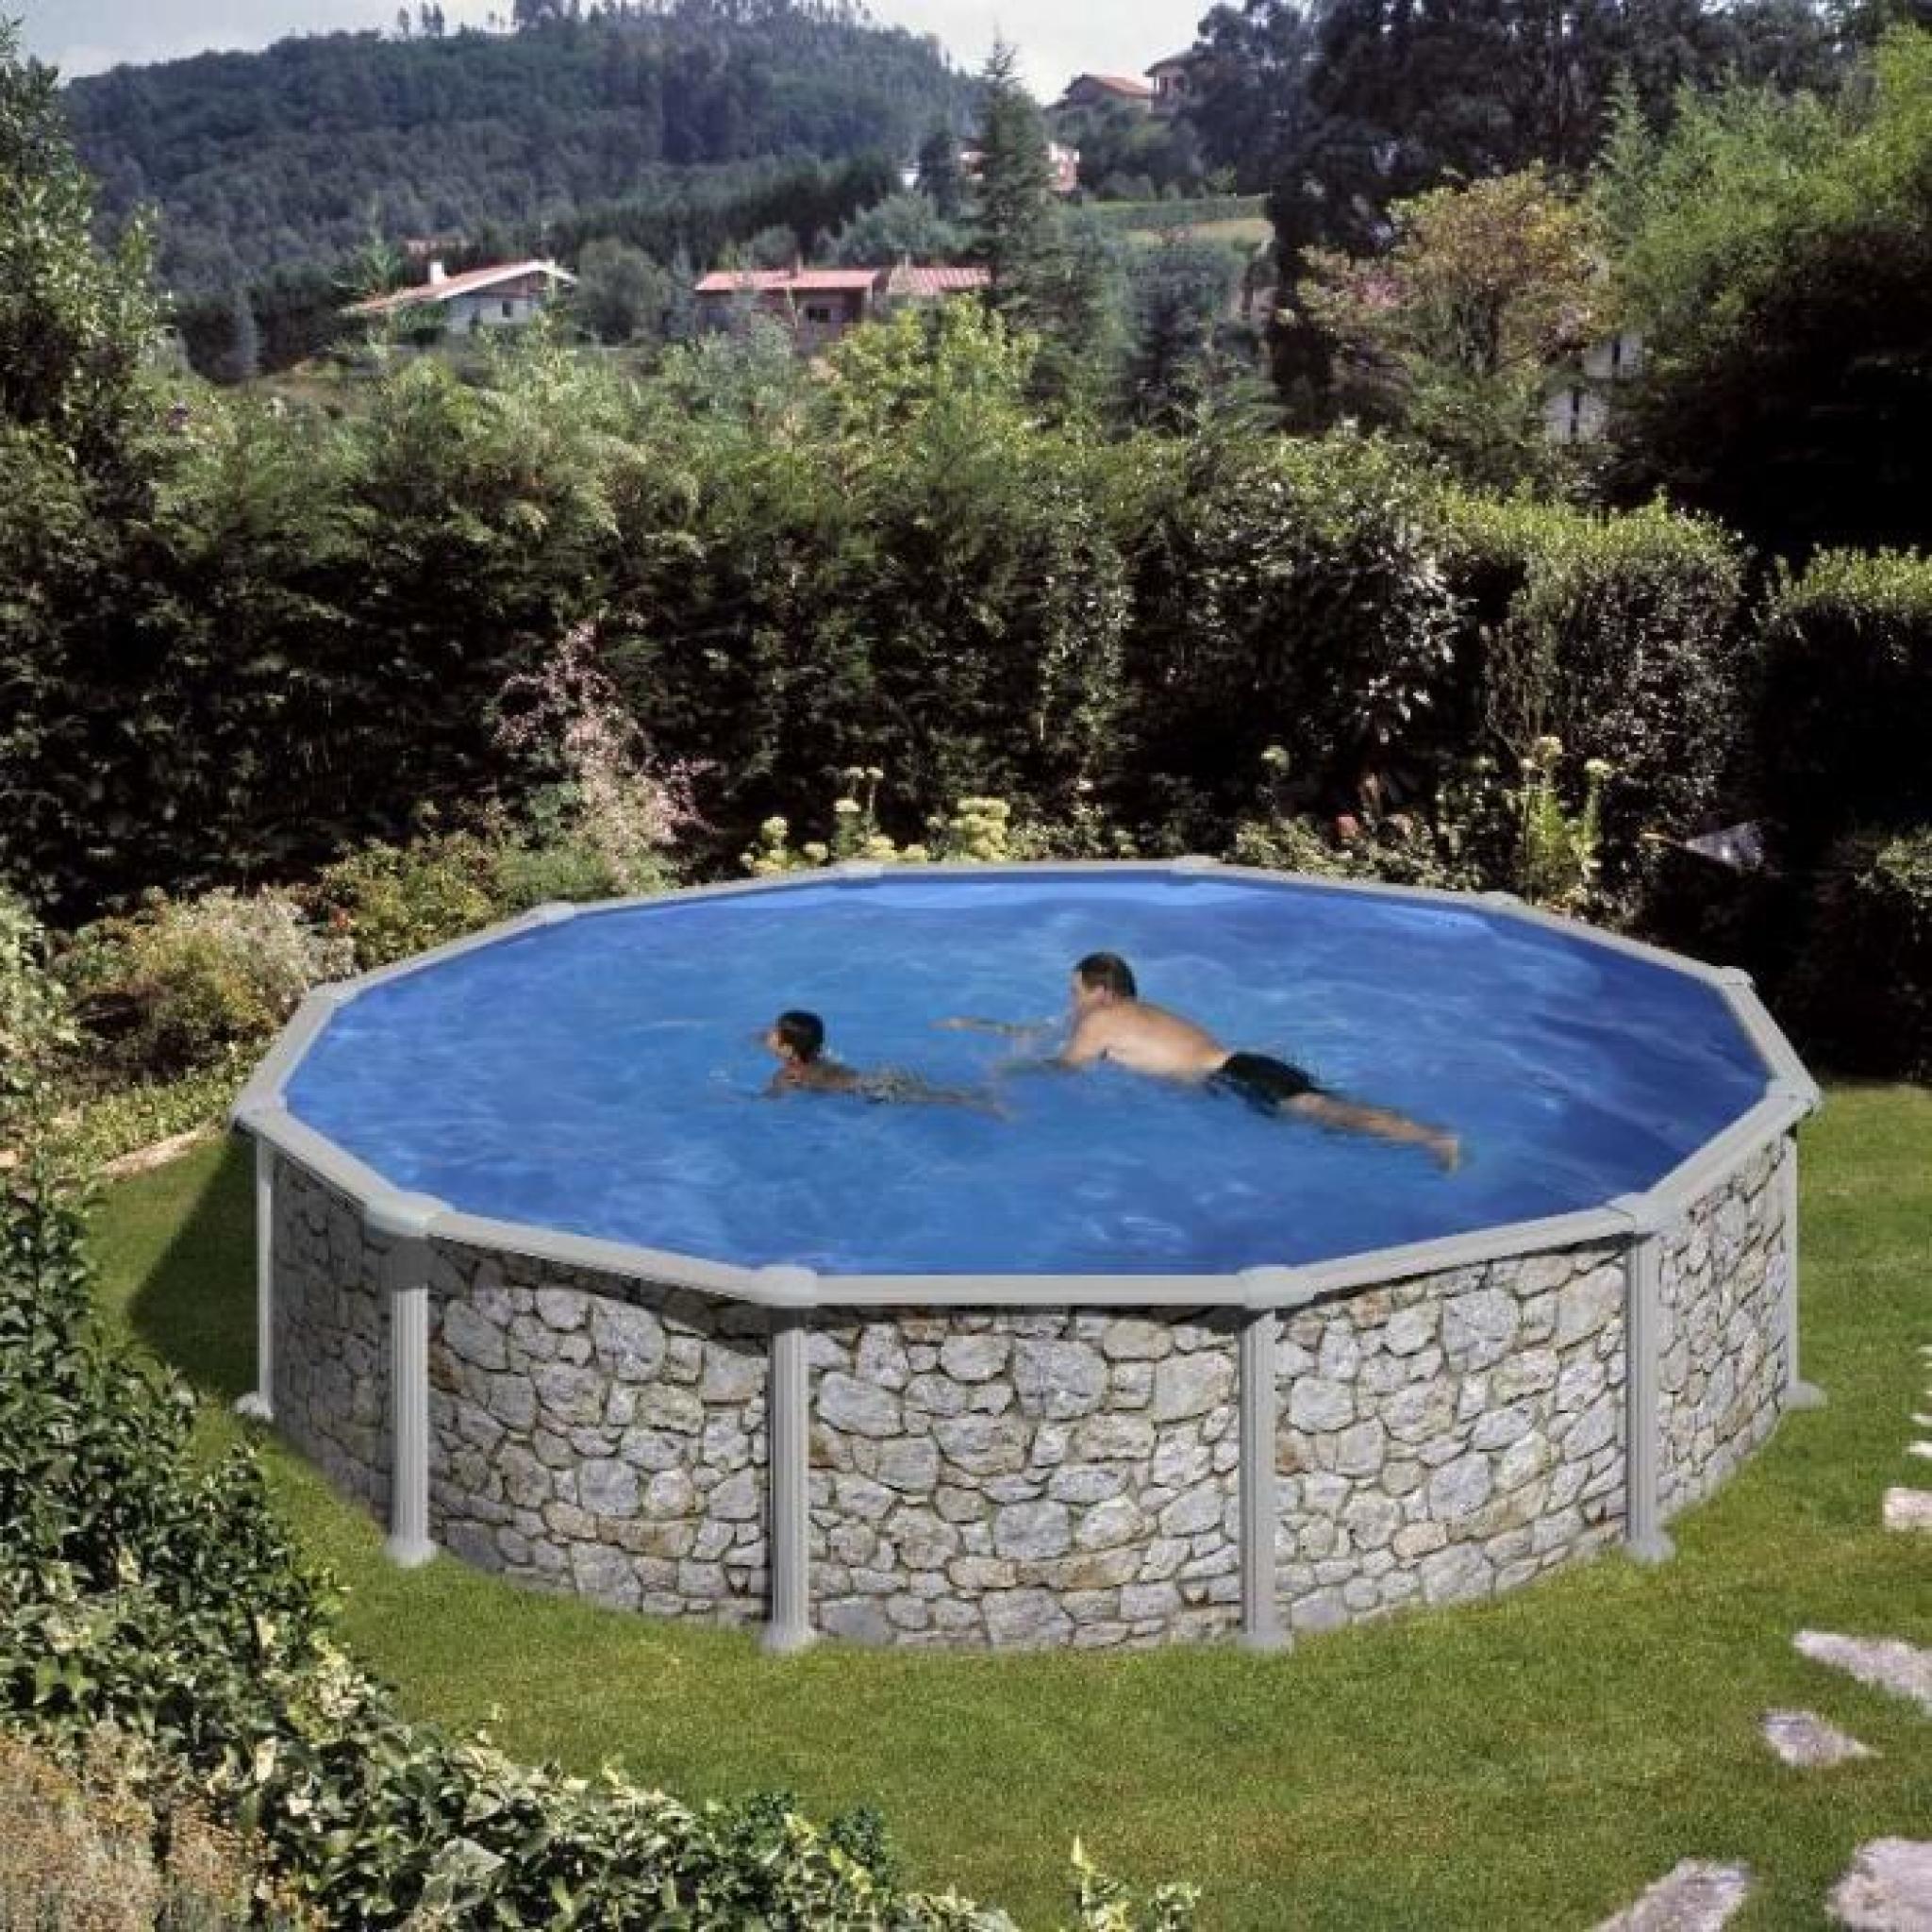 Piscine hors sol acier aspect pierre Alto - Ronde Diam 5.50m - H 1.32m -  Achat/Vente piscine hors sol pas cher 